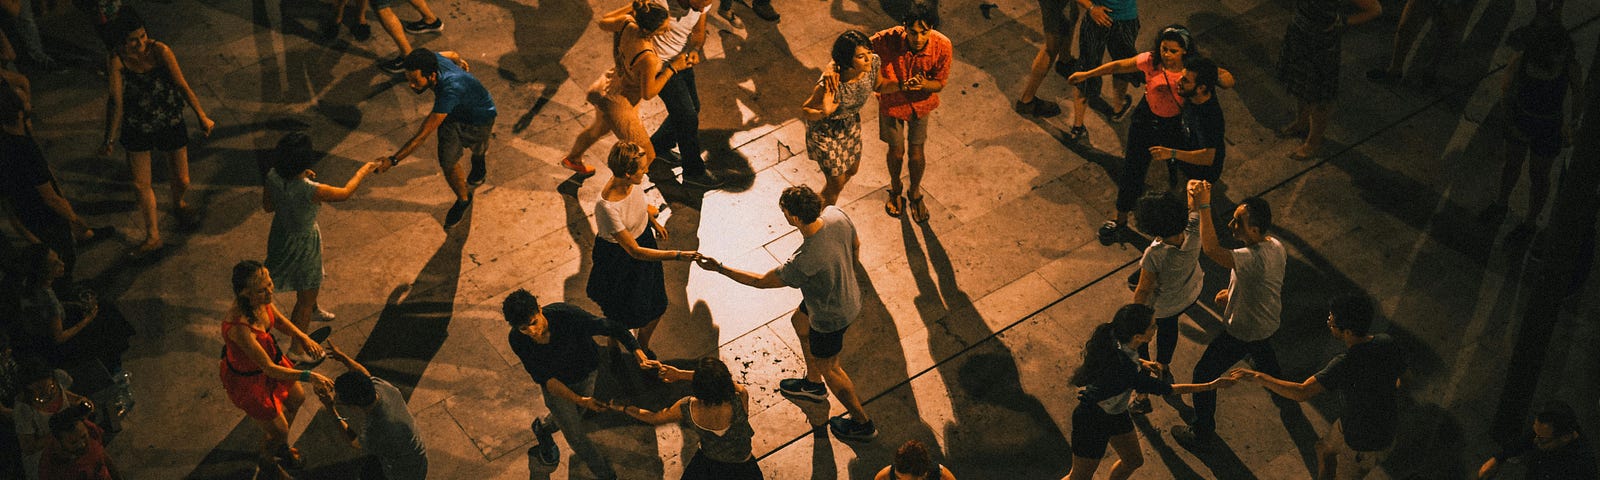 A dimly-lit dancefloor. Several couples are dancing the samba.